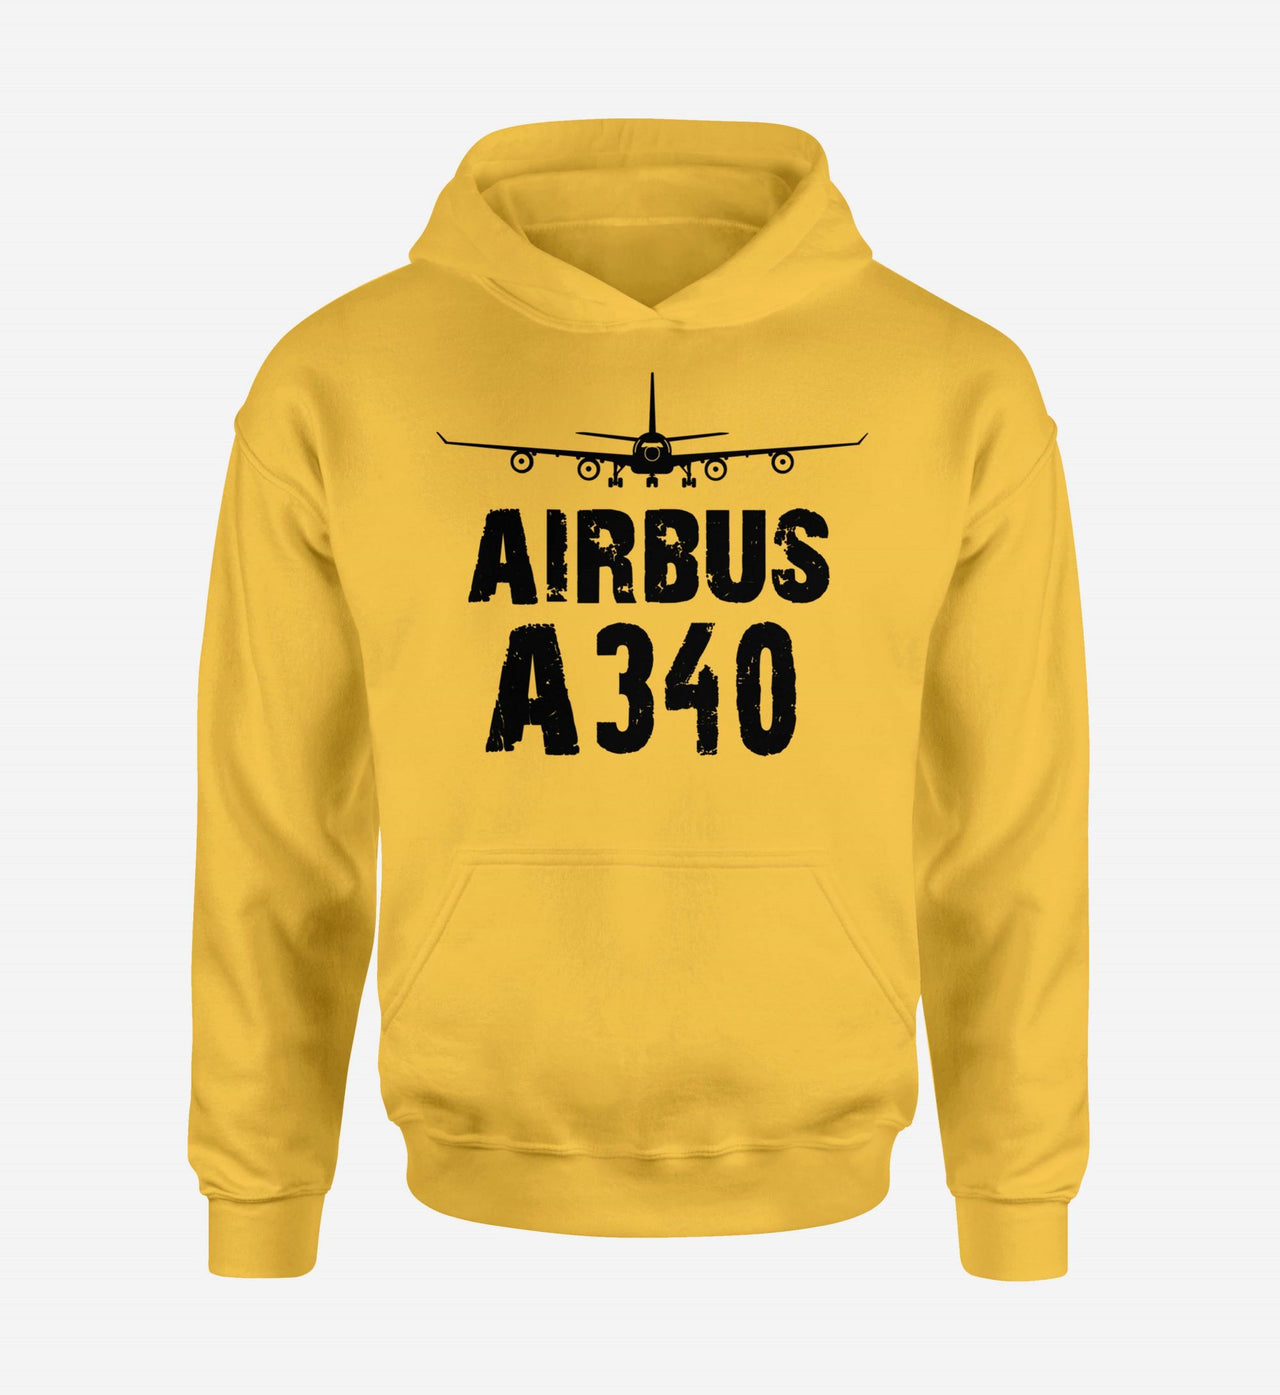 Airbus A340 & Plane Designed Hoodies